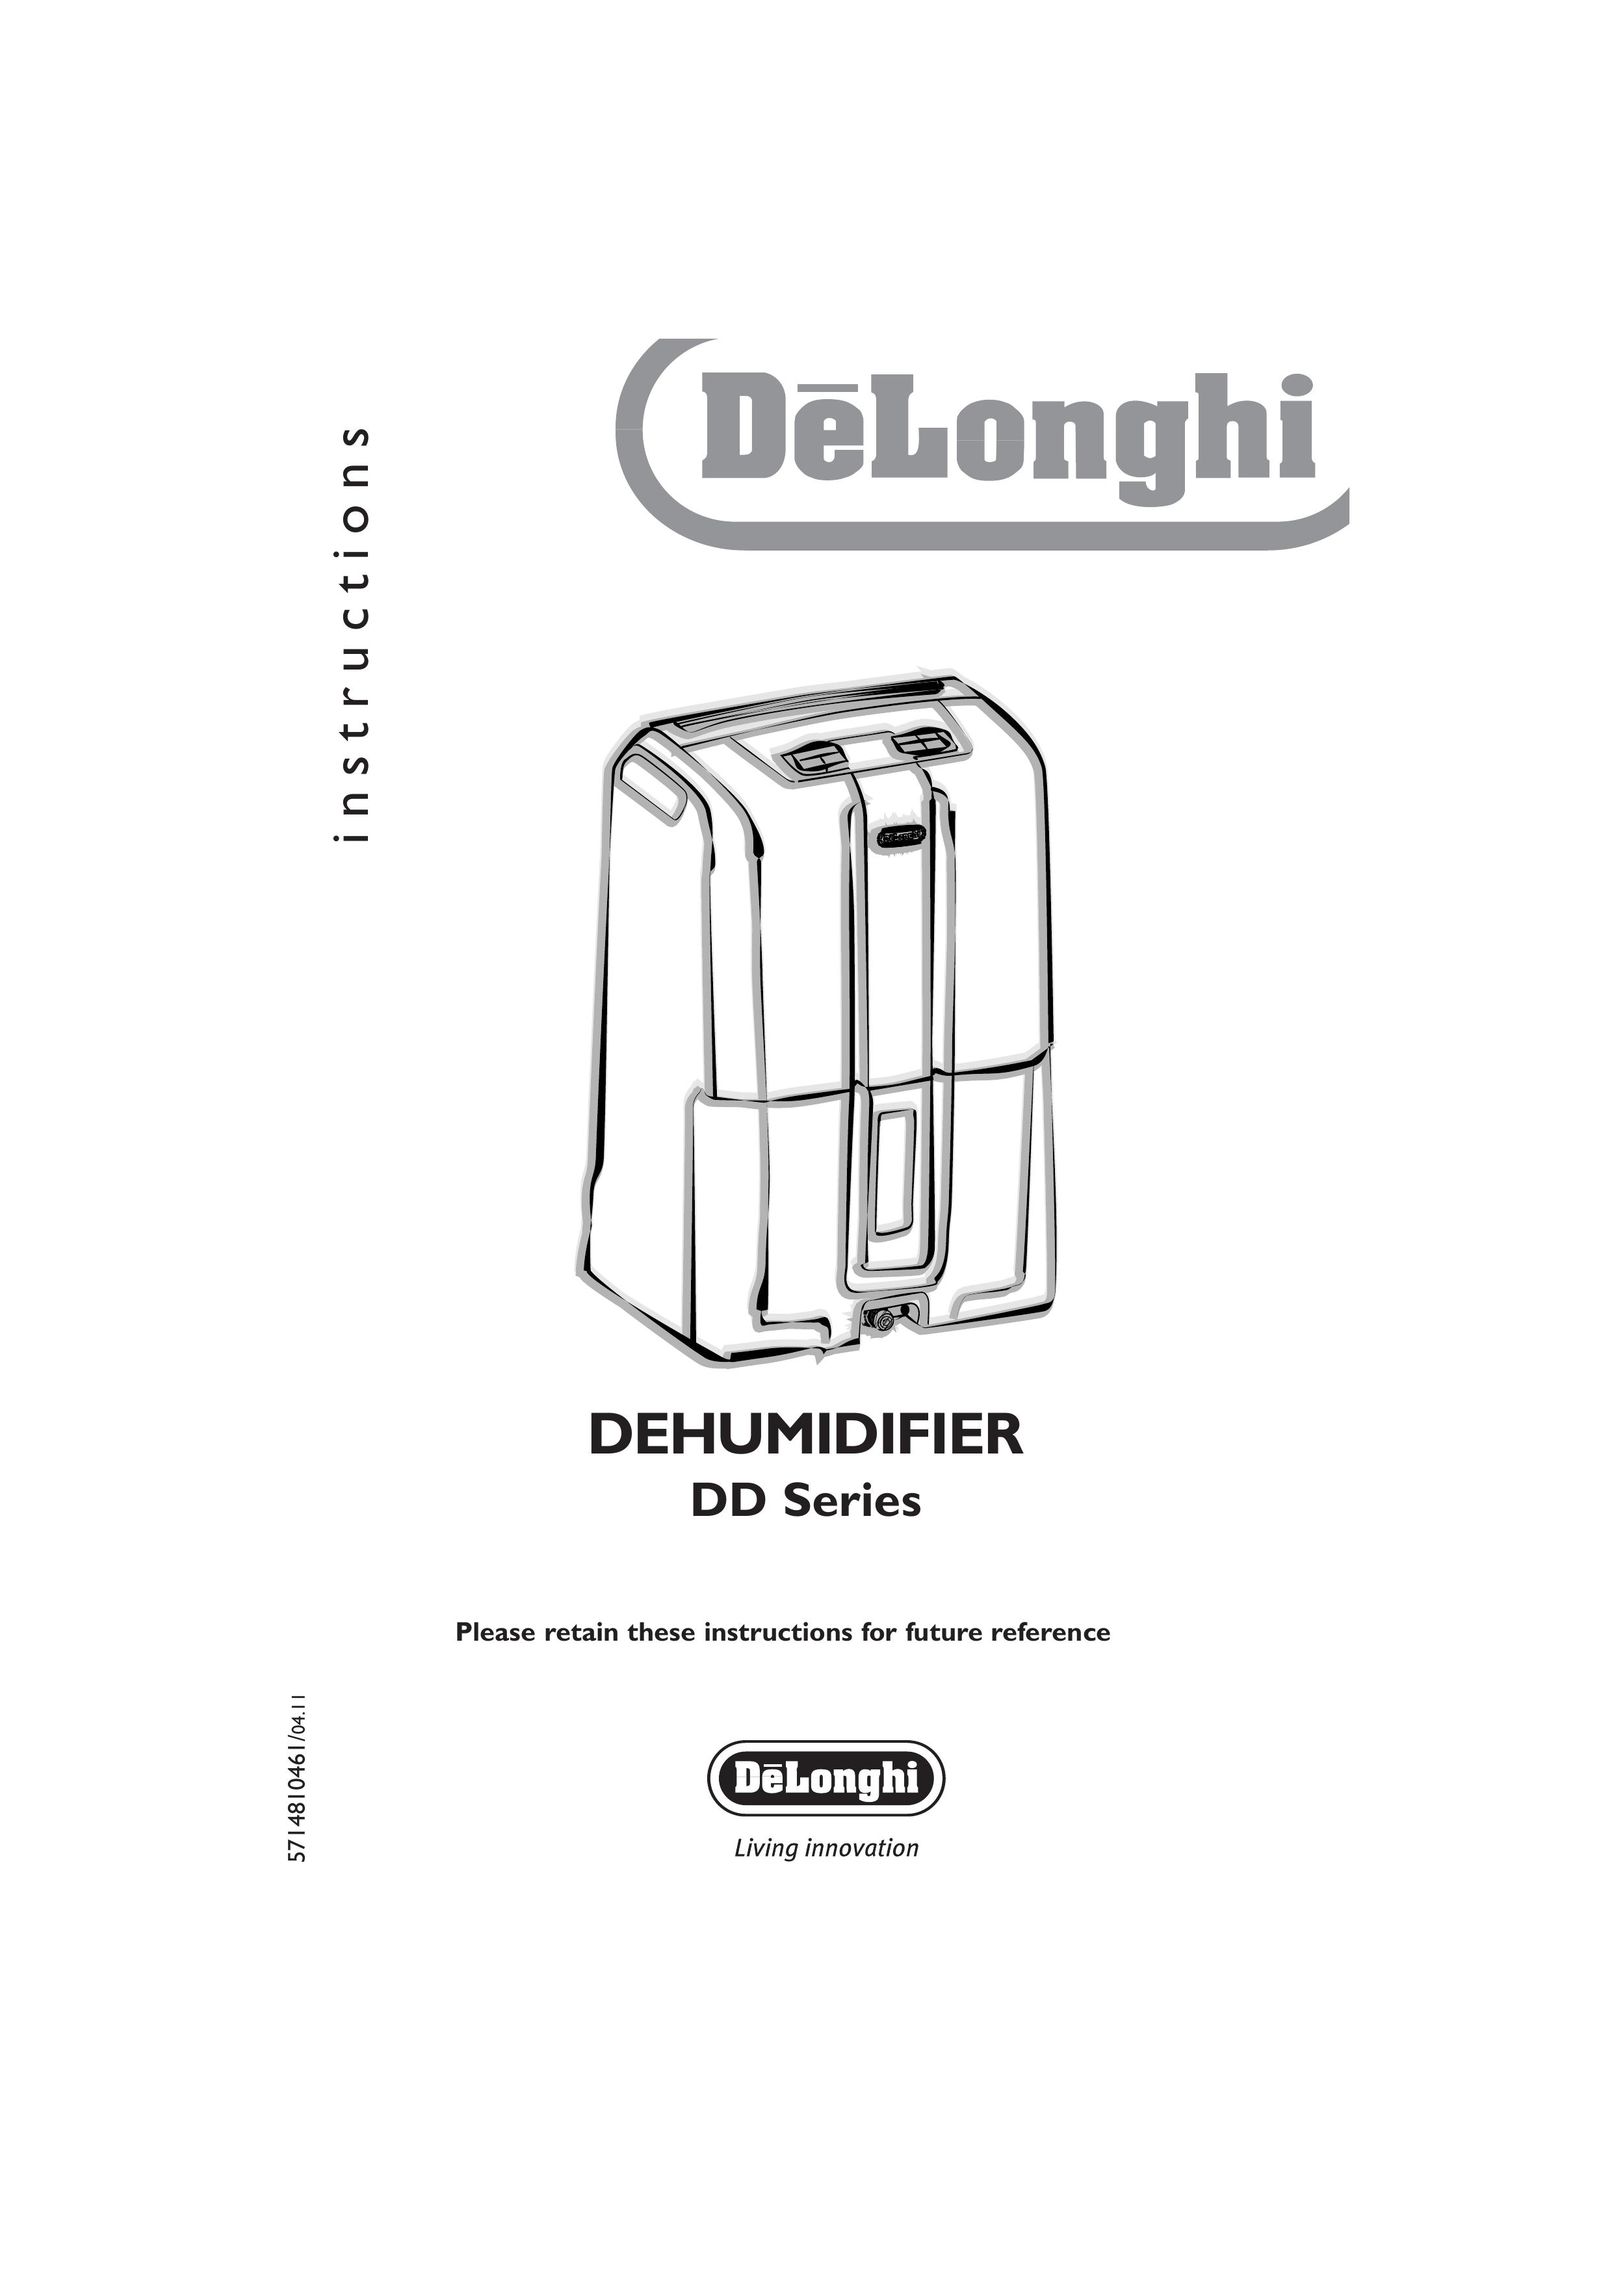 DeLonghi DD SERIES Dehumidifier User Manual